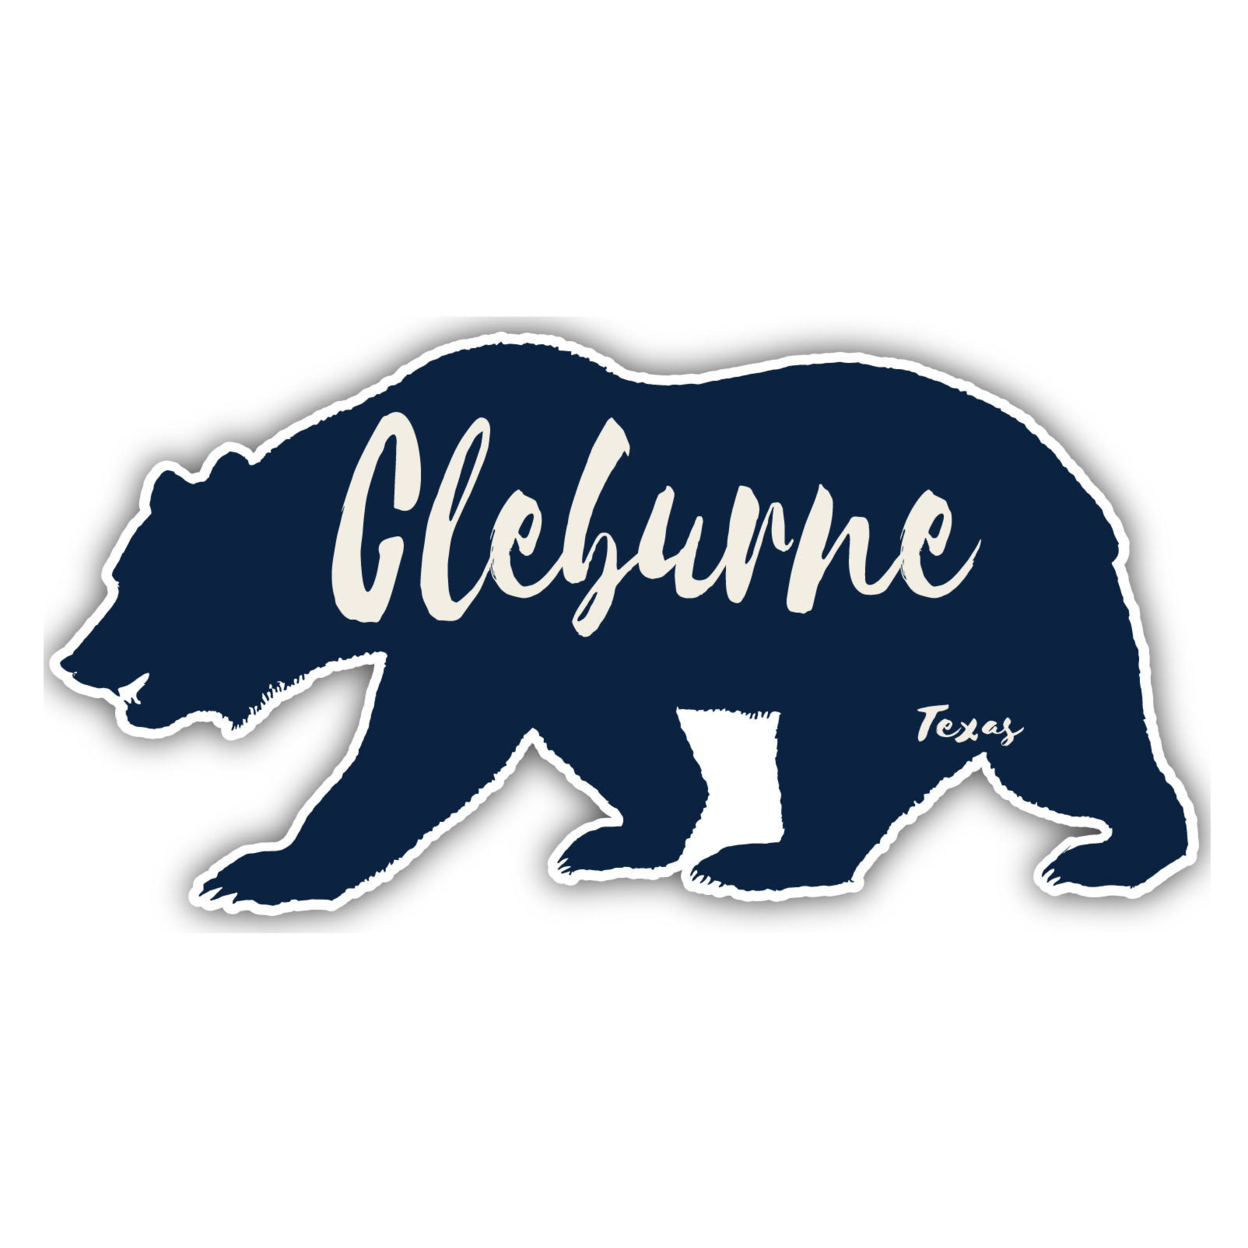 Cleburne Texas Souvenir Decorative Stickers (Choose Theme And Size) - Single Unit, 4-Inch, Bear